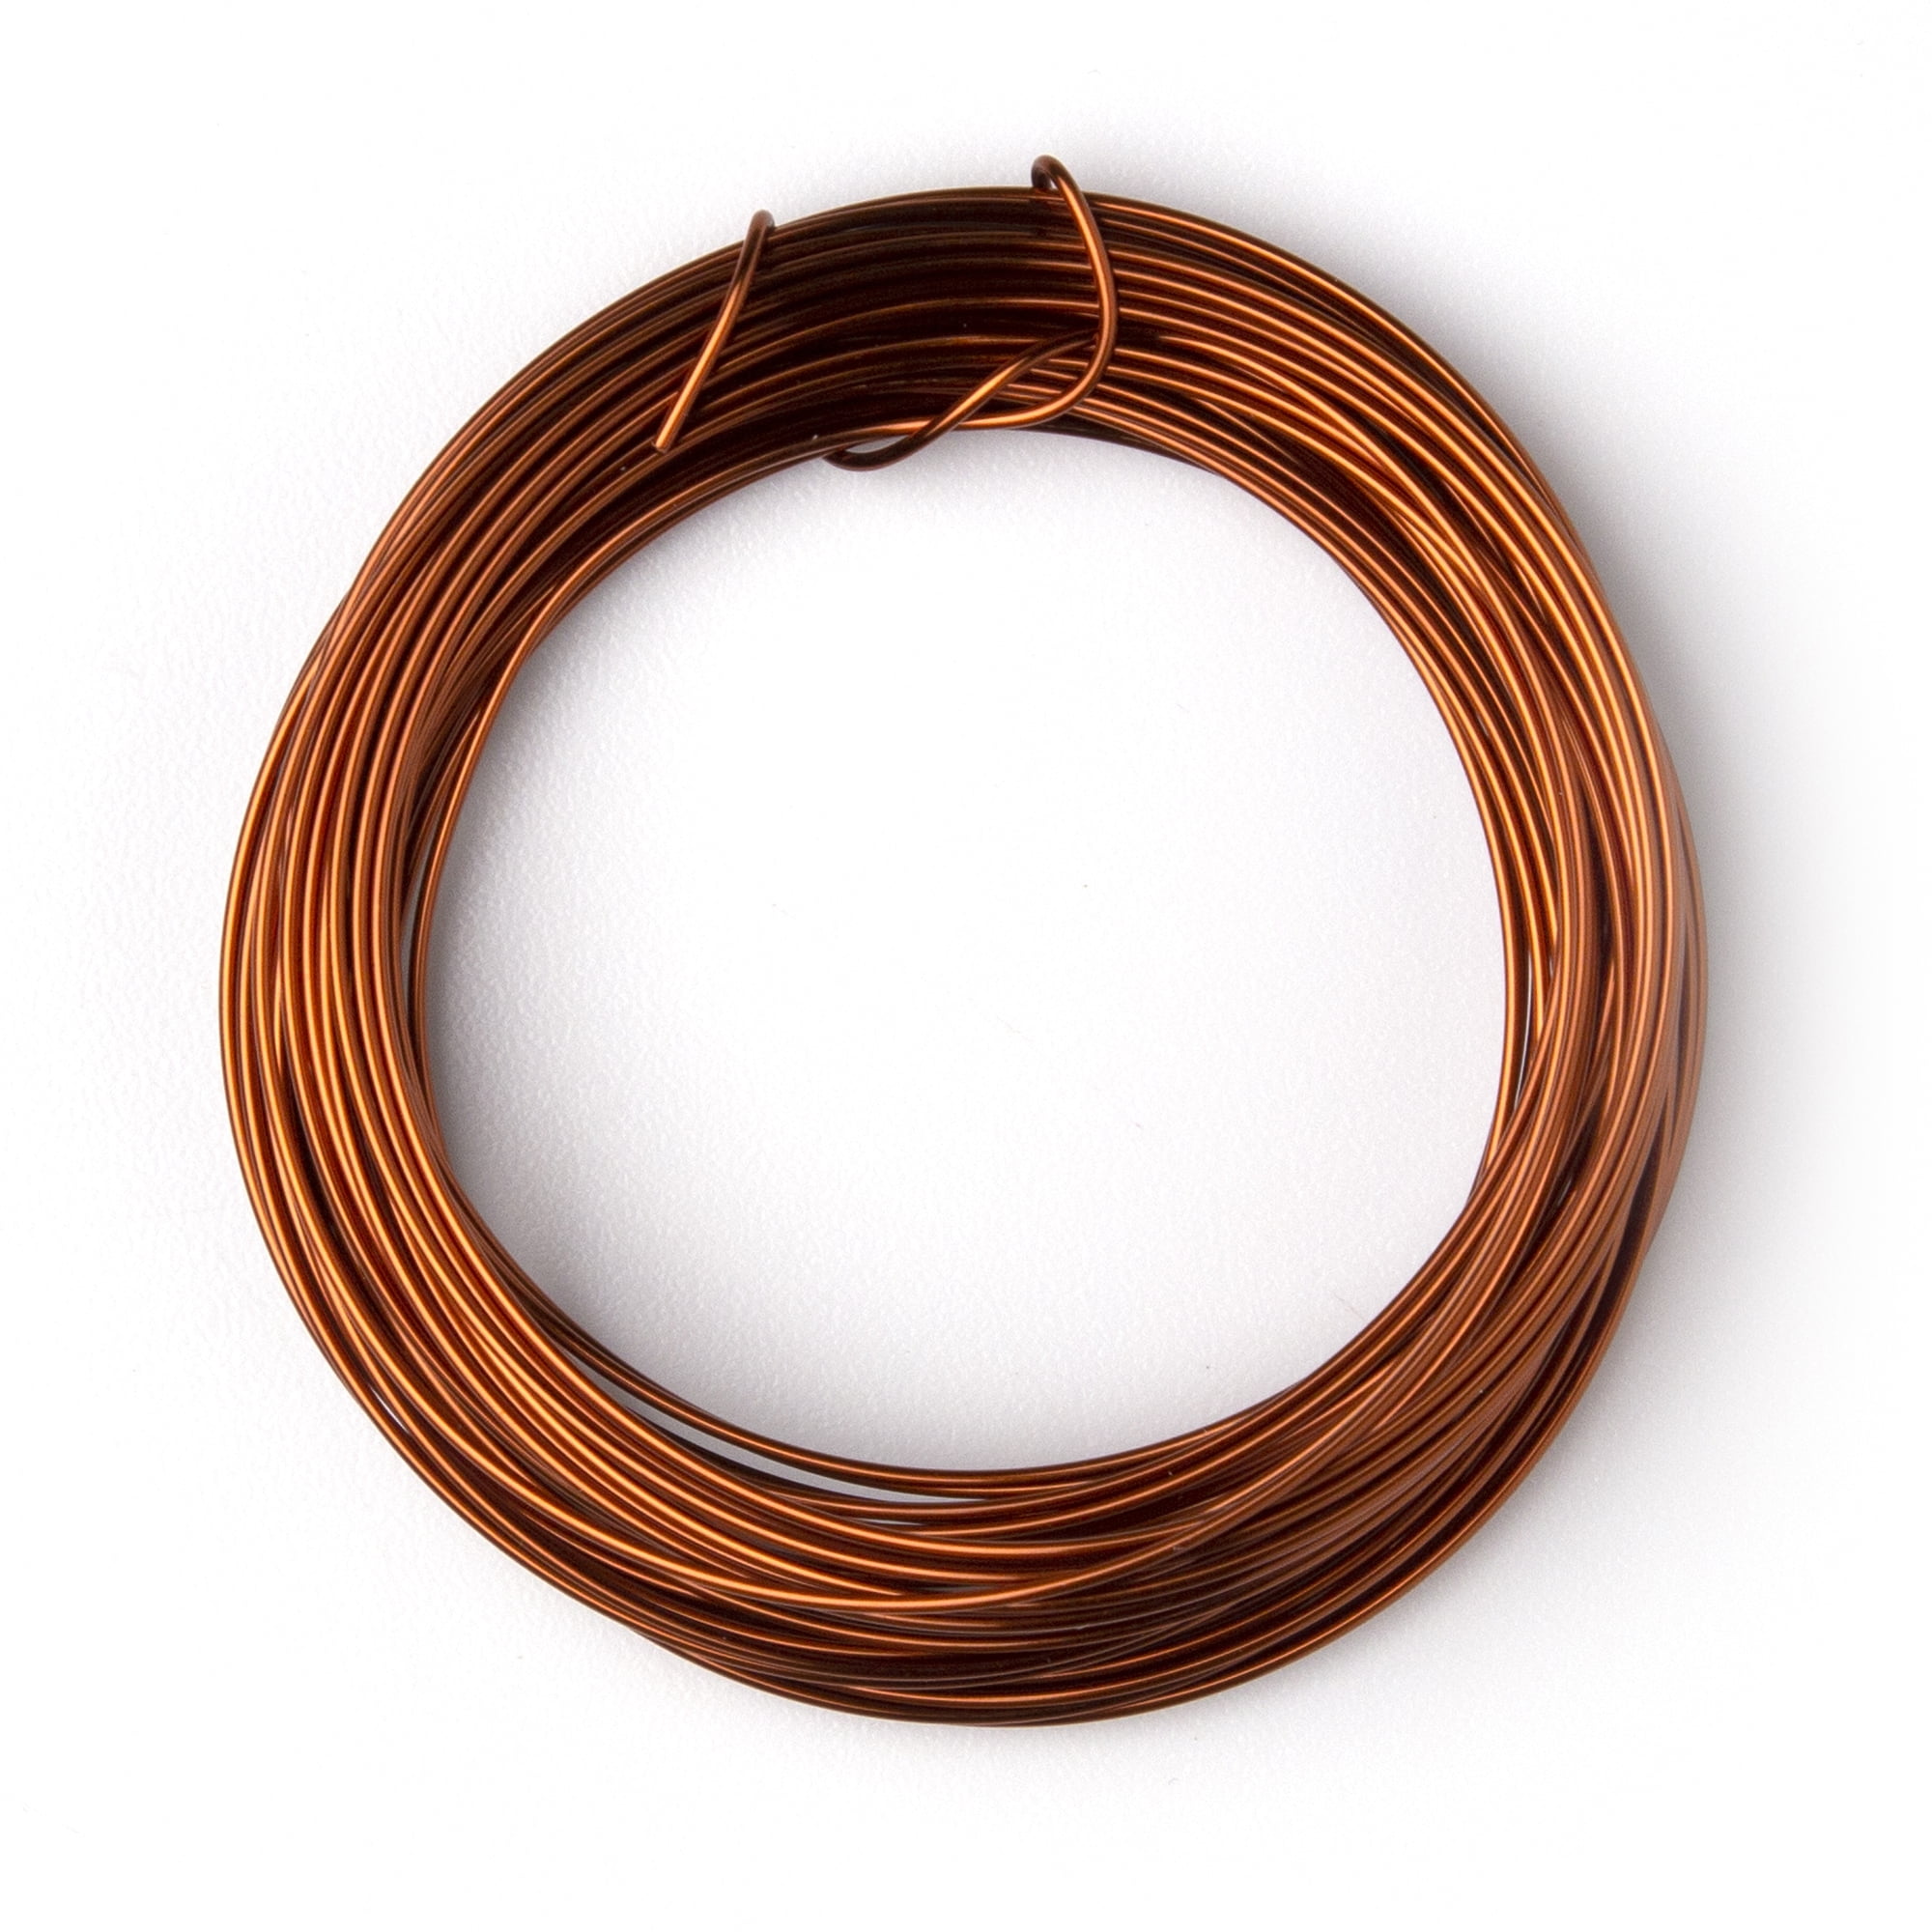 1 Roll 0.2-1mm Copper Wire Jewelry Making 20 Gauge Craft DIY Gold Sliver